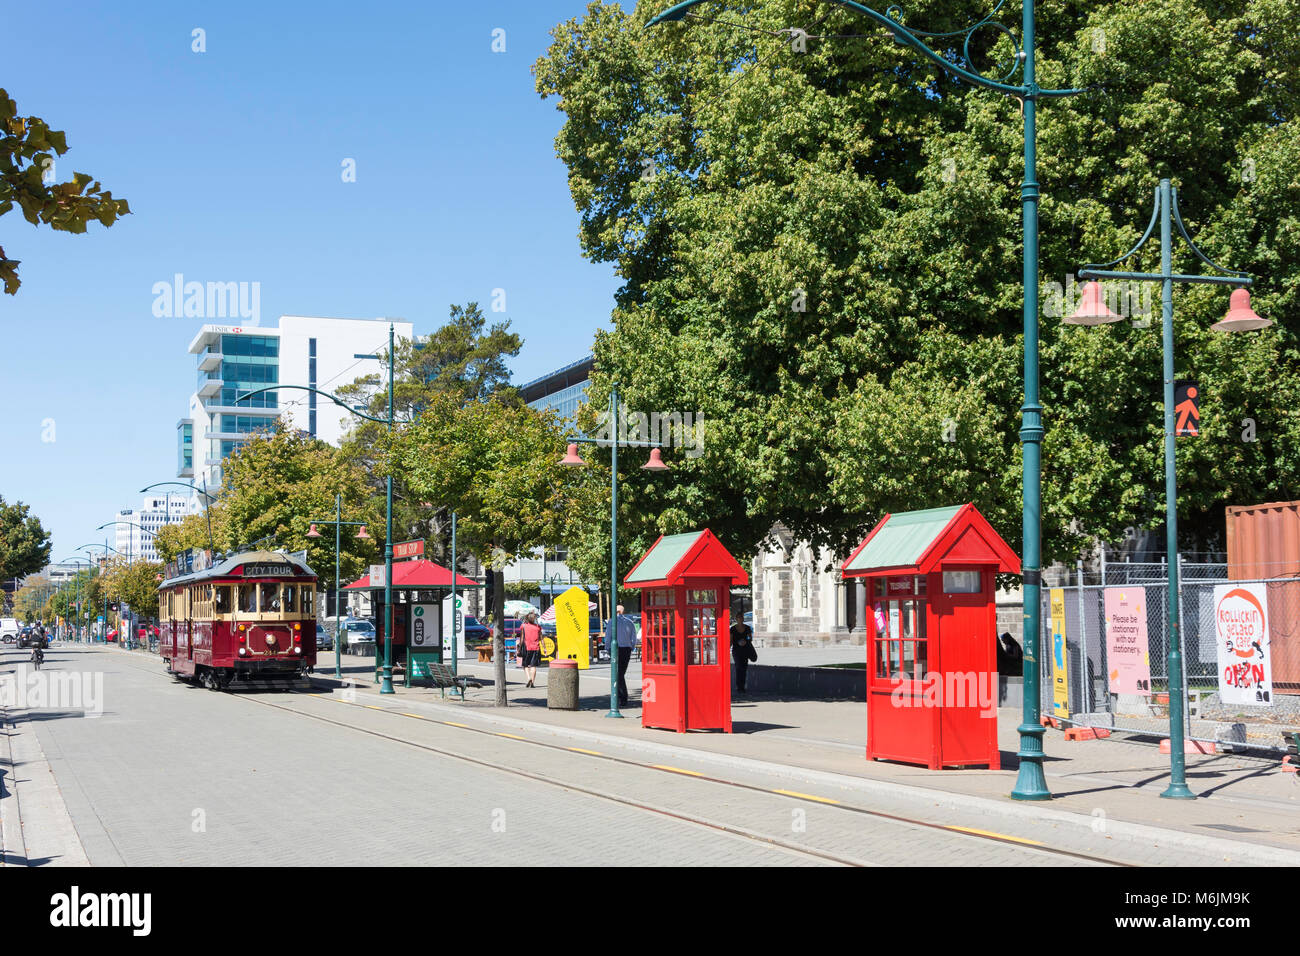 City Tour alla fermata del tram, Worcester Boulevard, Christchurch, Canterbury, Nuova Zelanda Foto Stock